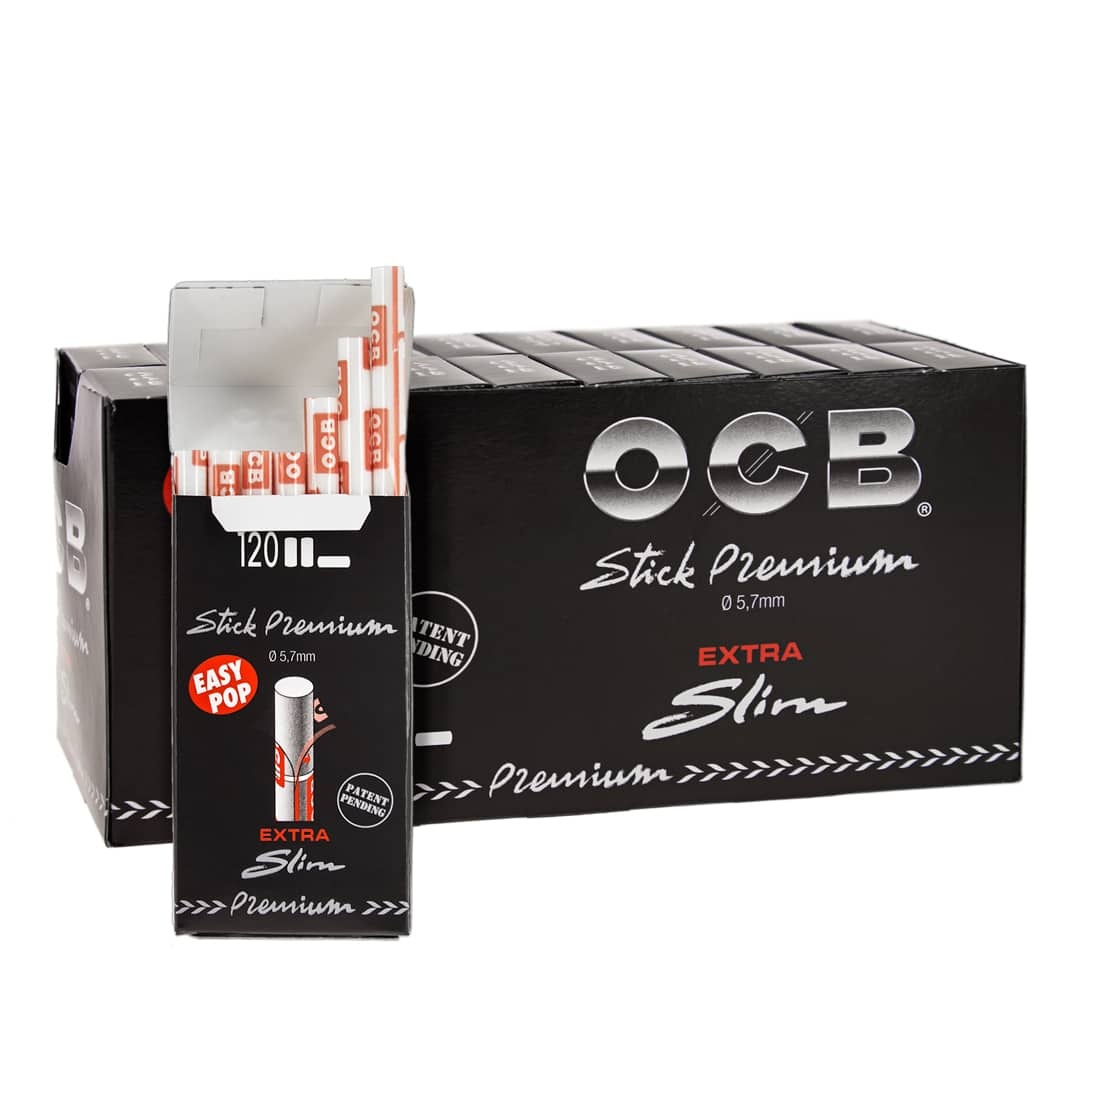 Filtres OCB Slim 50 sachets de 150 - PW Distribution